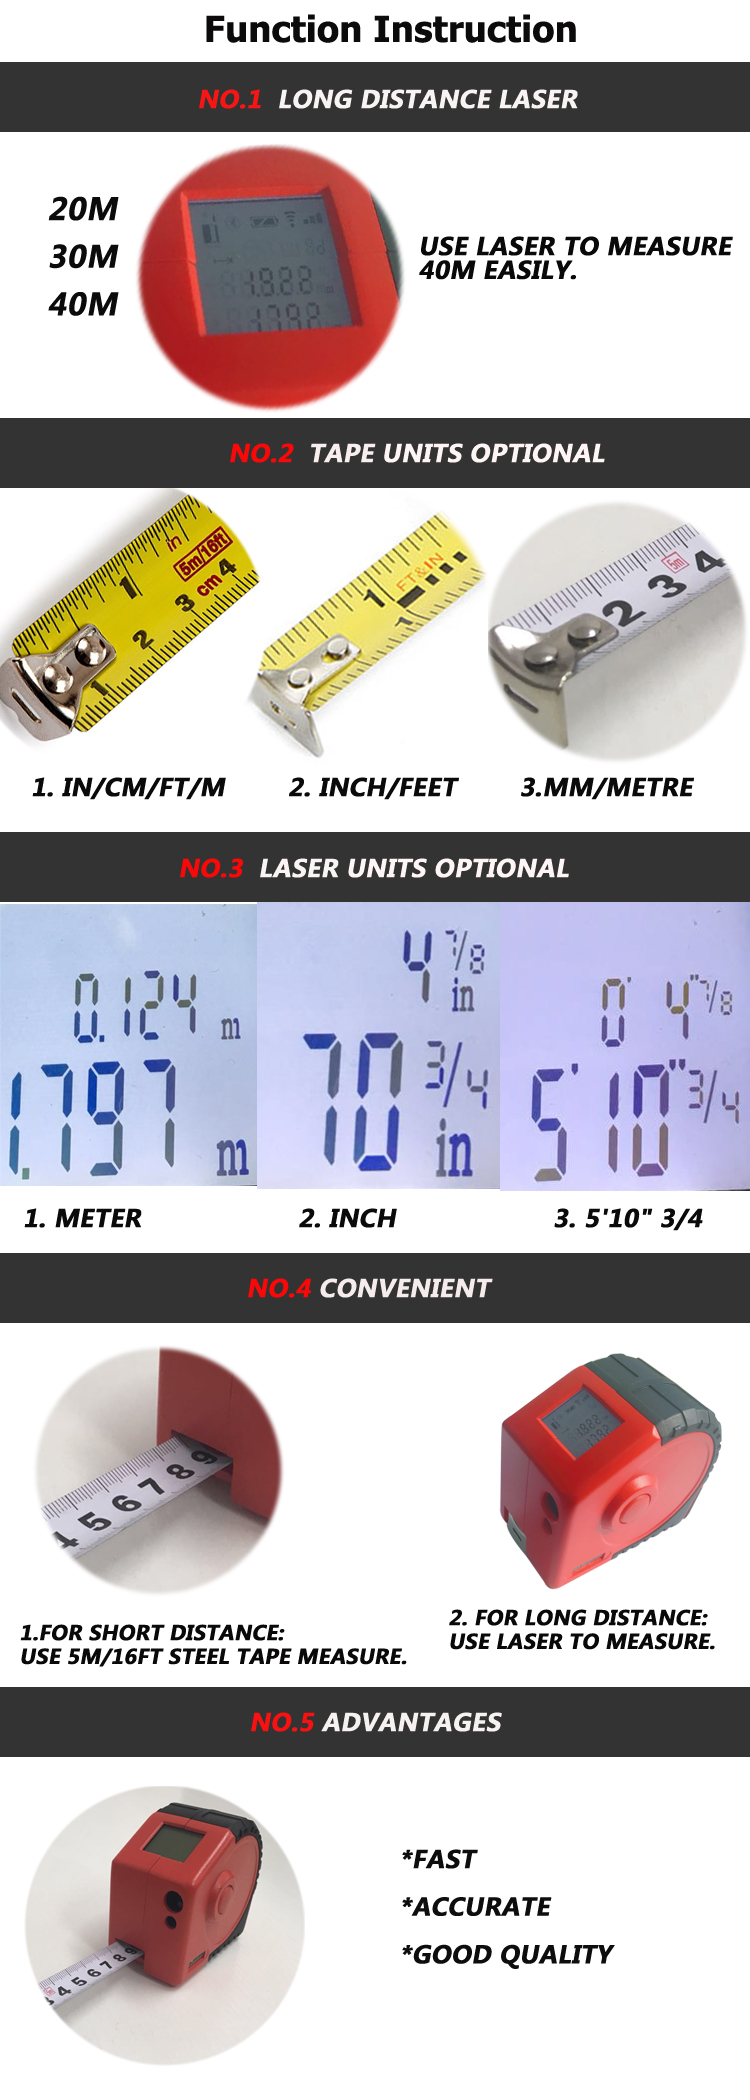 Laser tape measure Function Instruction